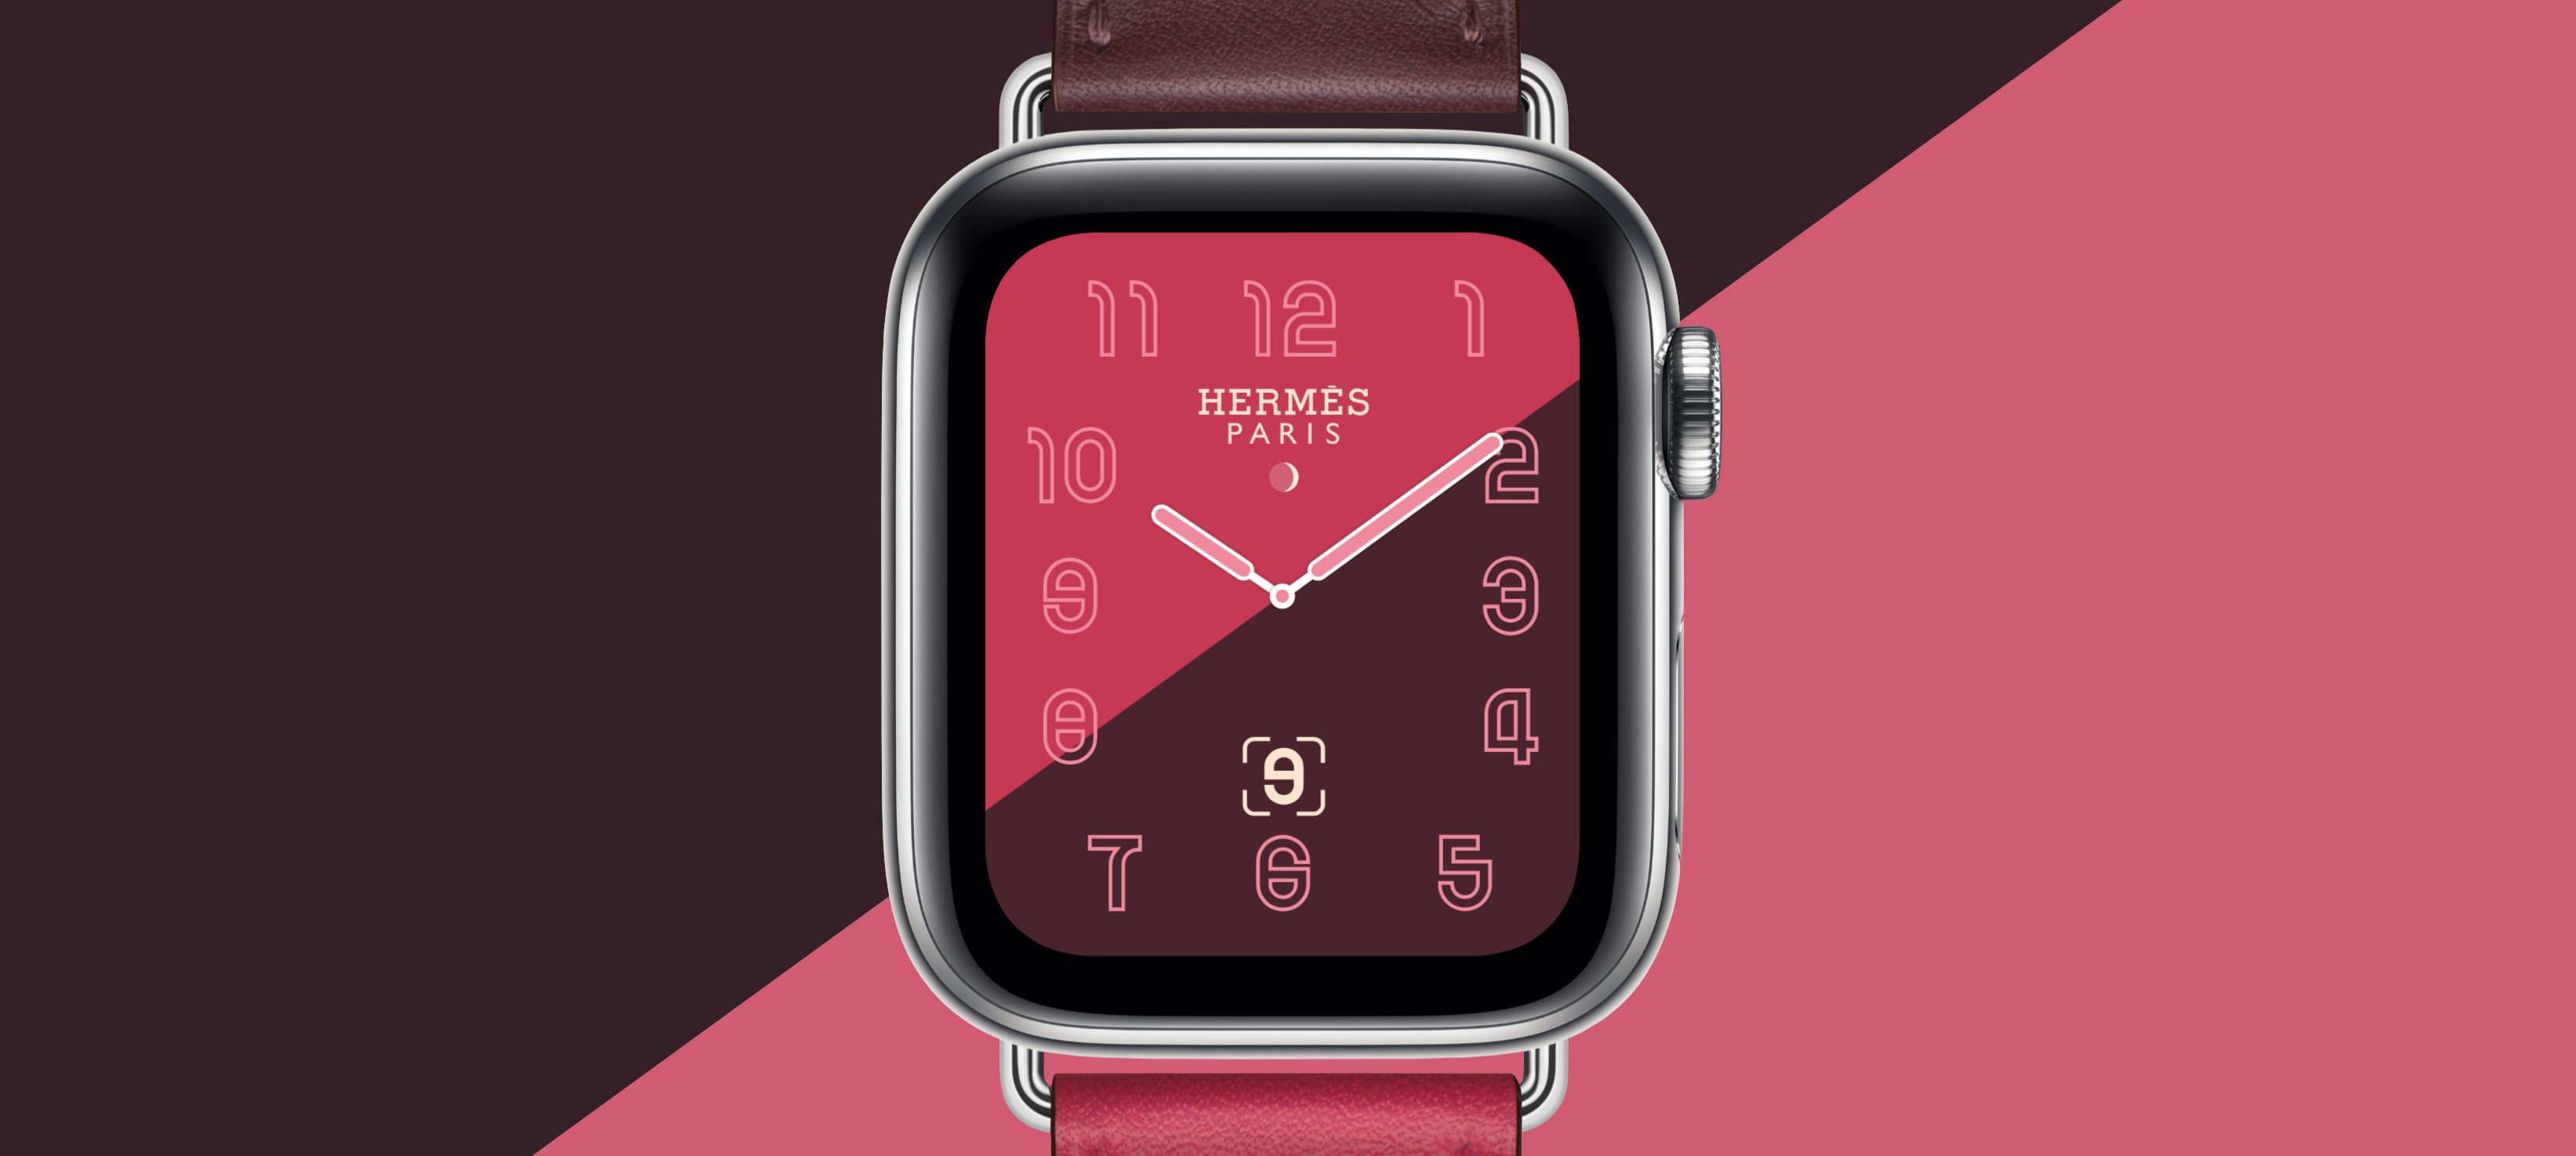 Hermes Apple Watch Face Series 4 - HD Wallpaper 